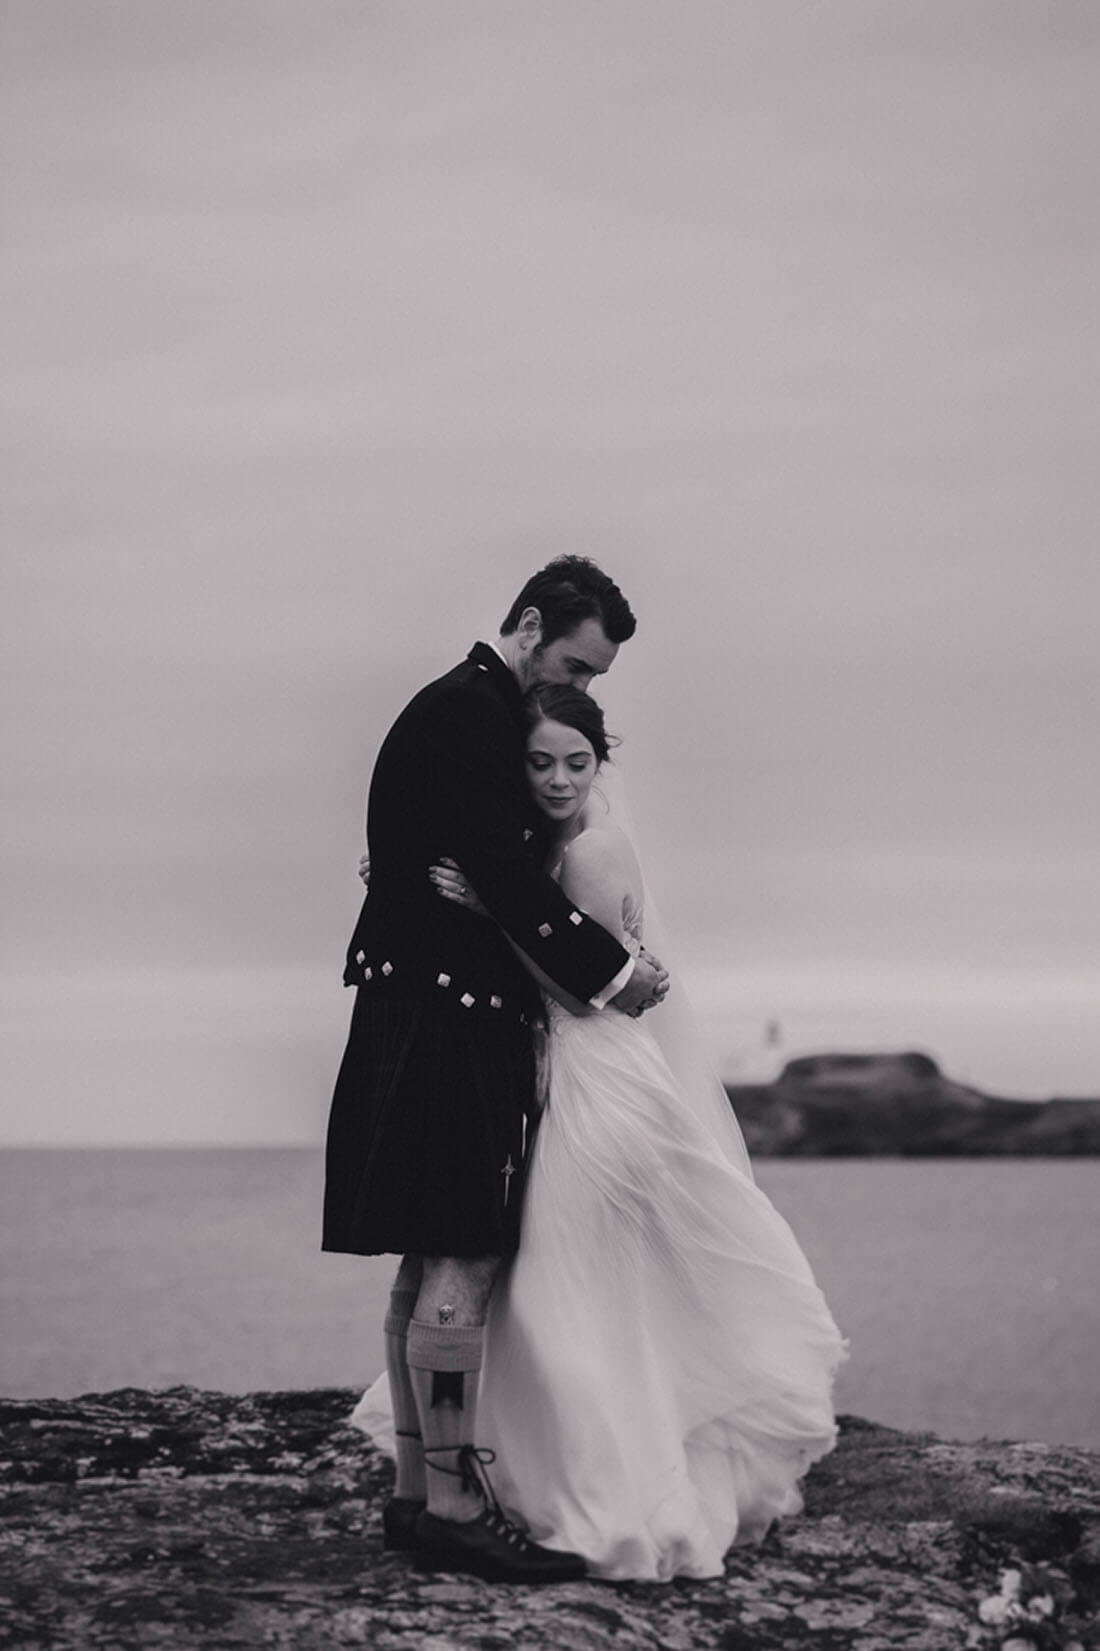 Small wedding photographer Edinburgh